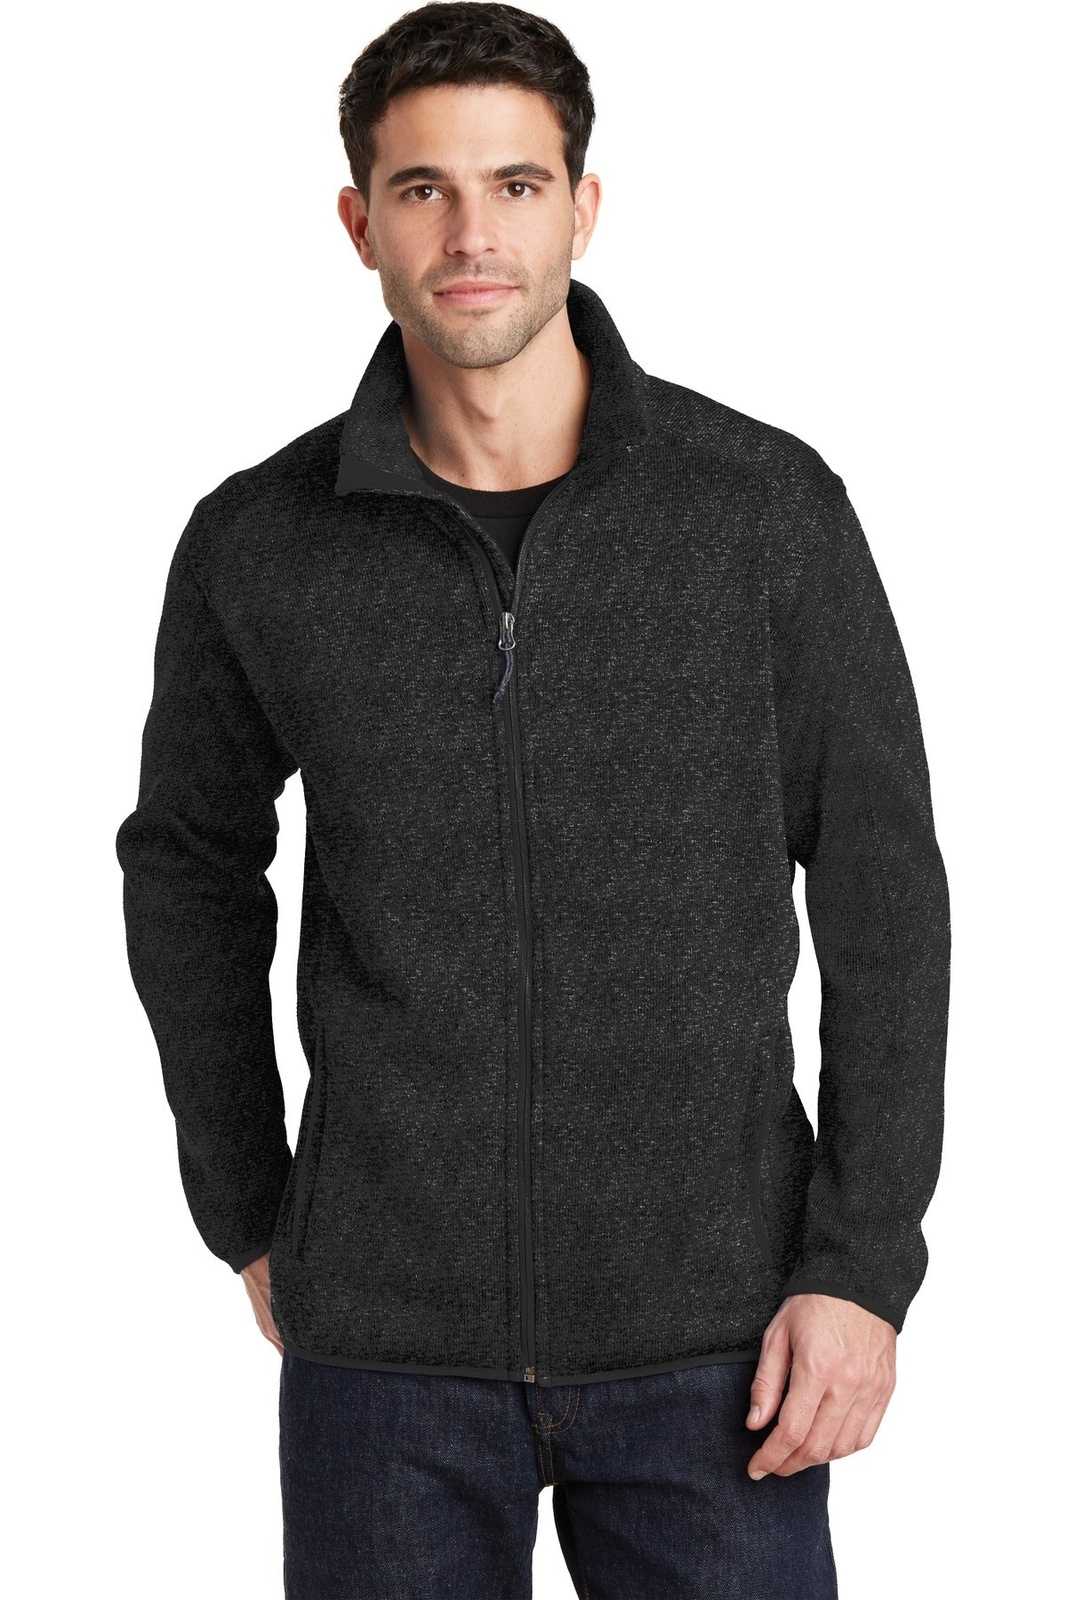 Port Authority F232 Sweater Fleece Jacket - Black Heather - HIT a Double - 1